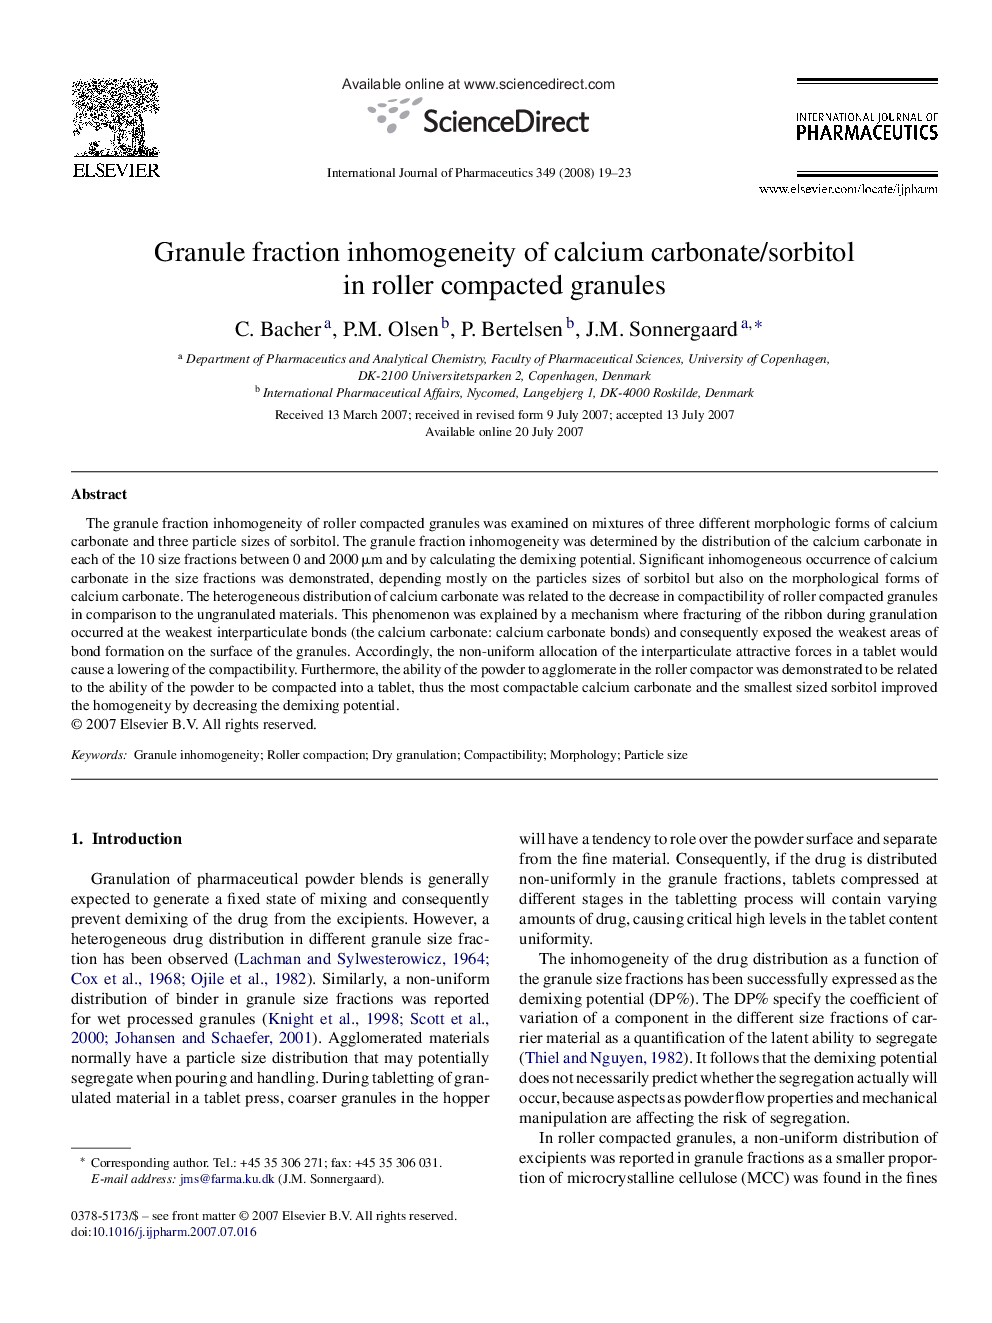 Granule fraction inhomogeneity of calcium carbonate/sorbitol in roller compacted granules